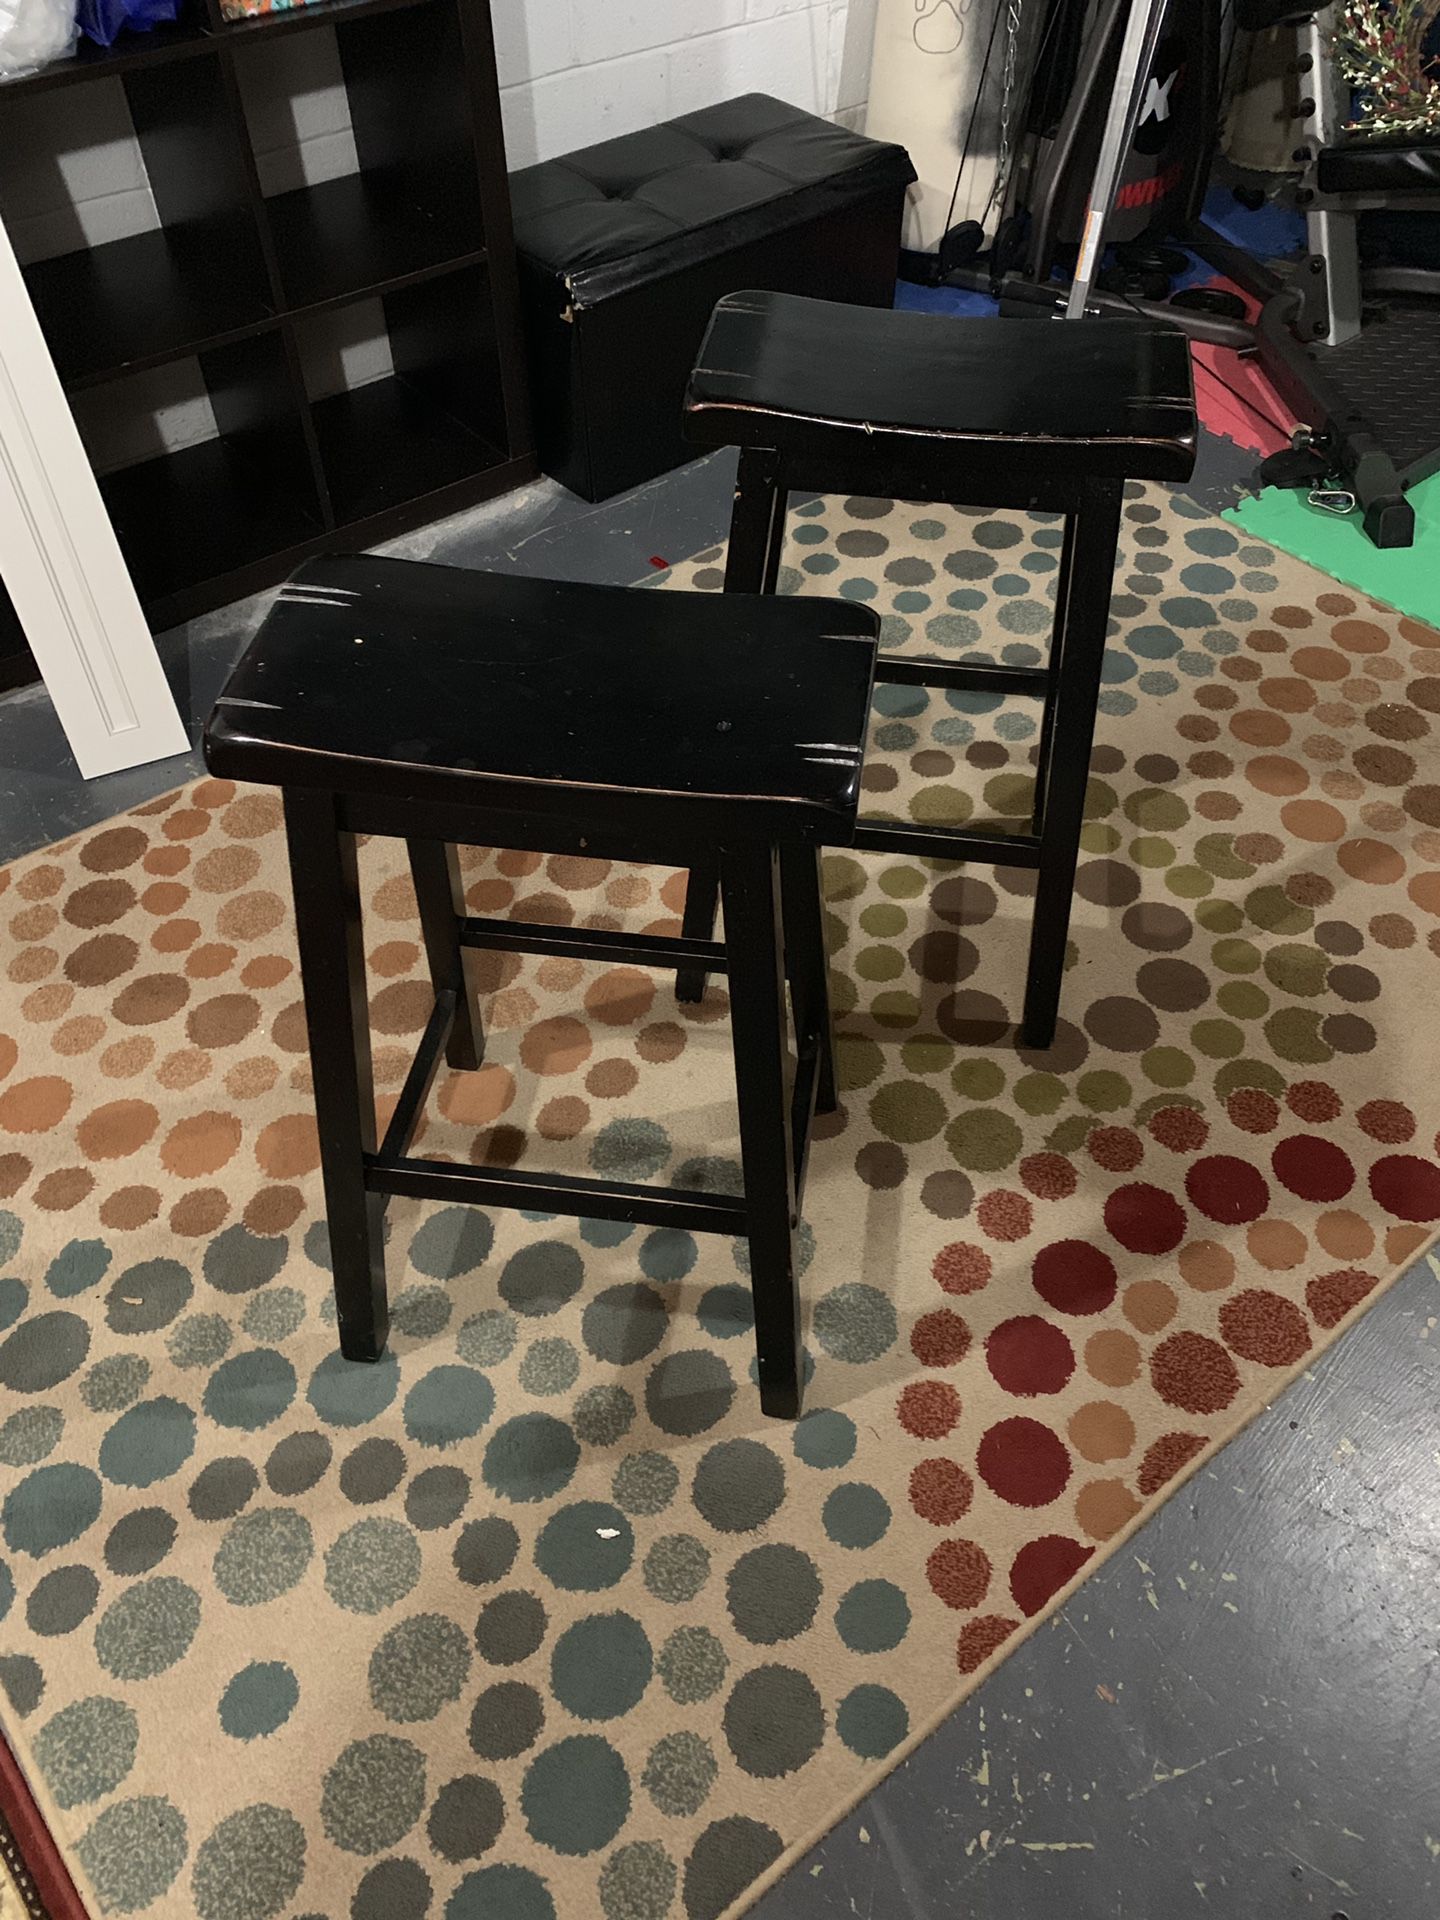 Black bar stools